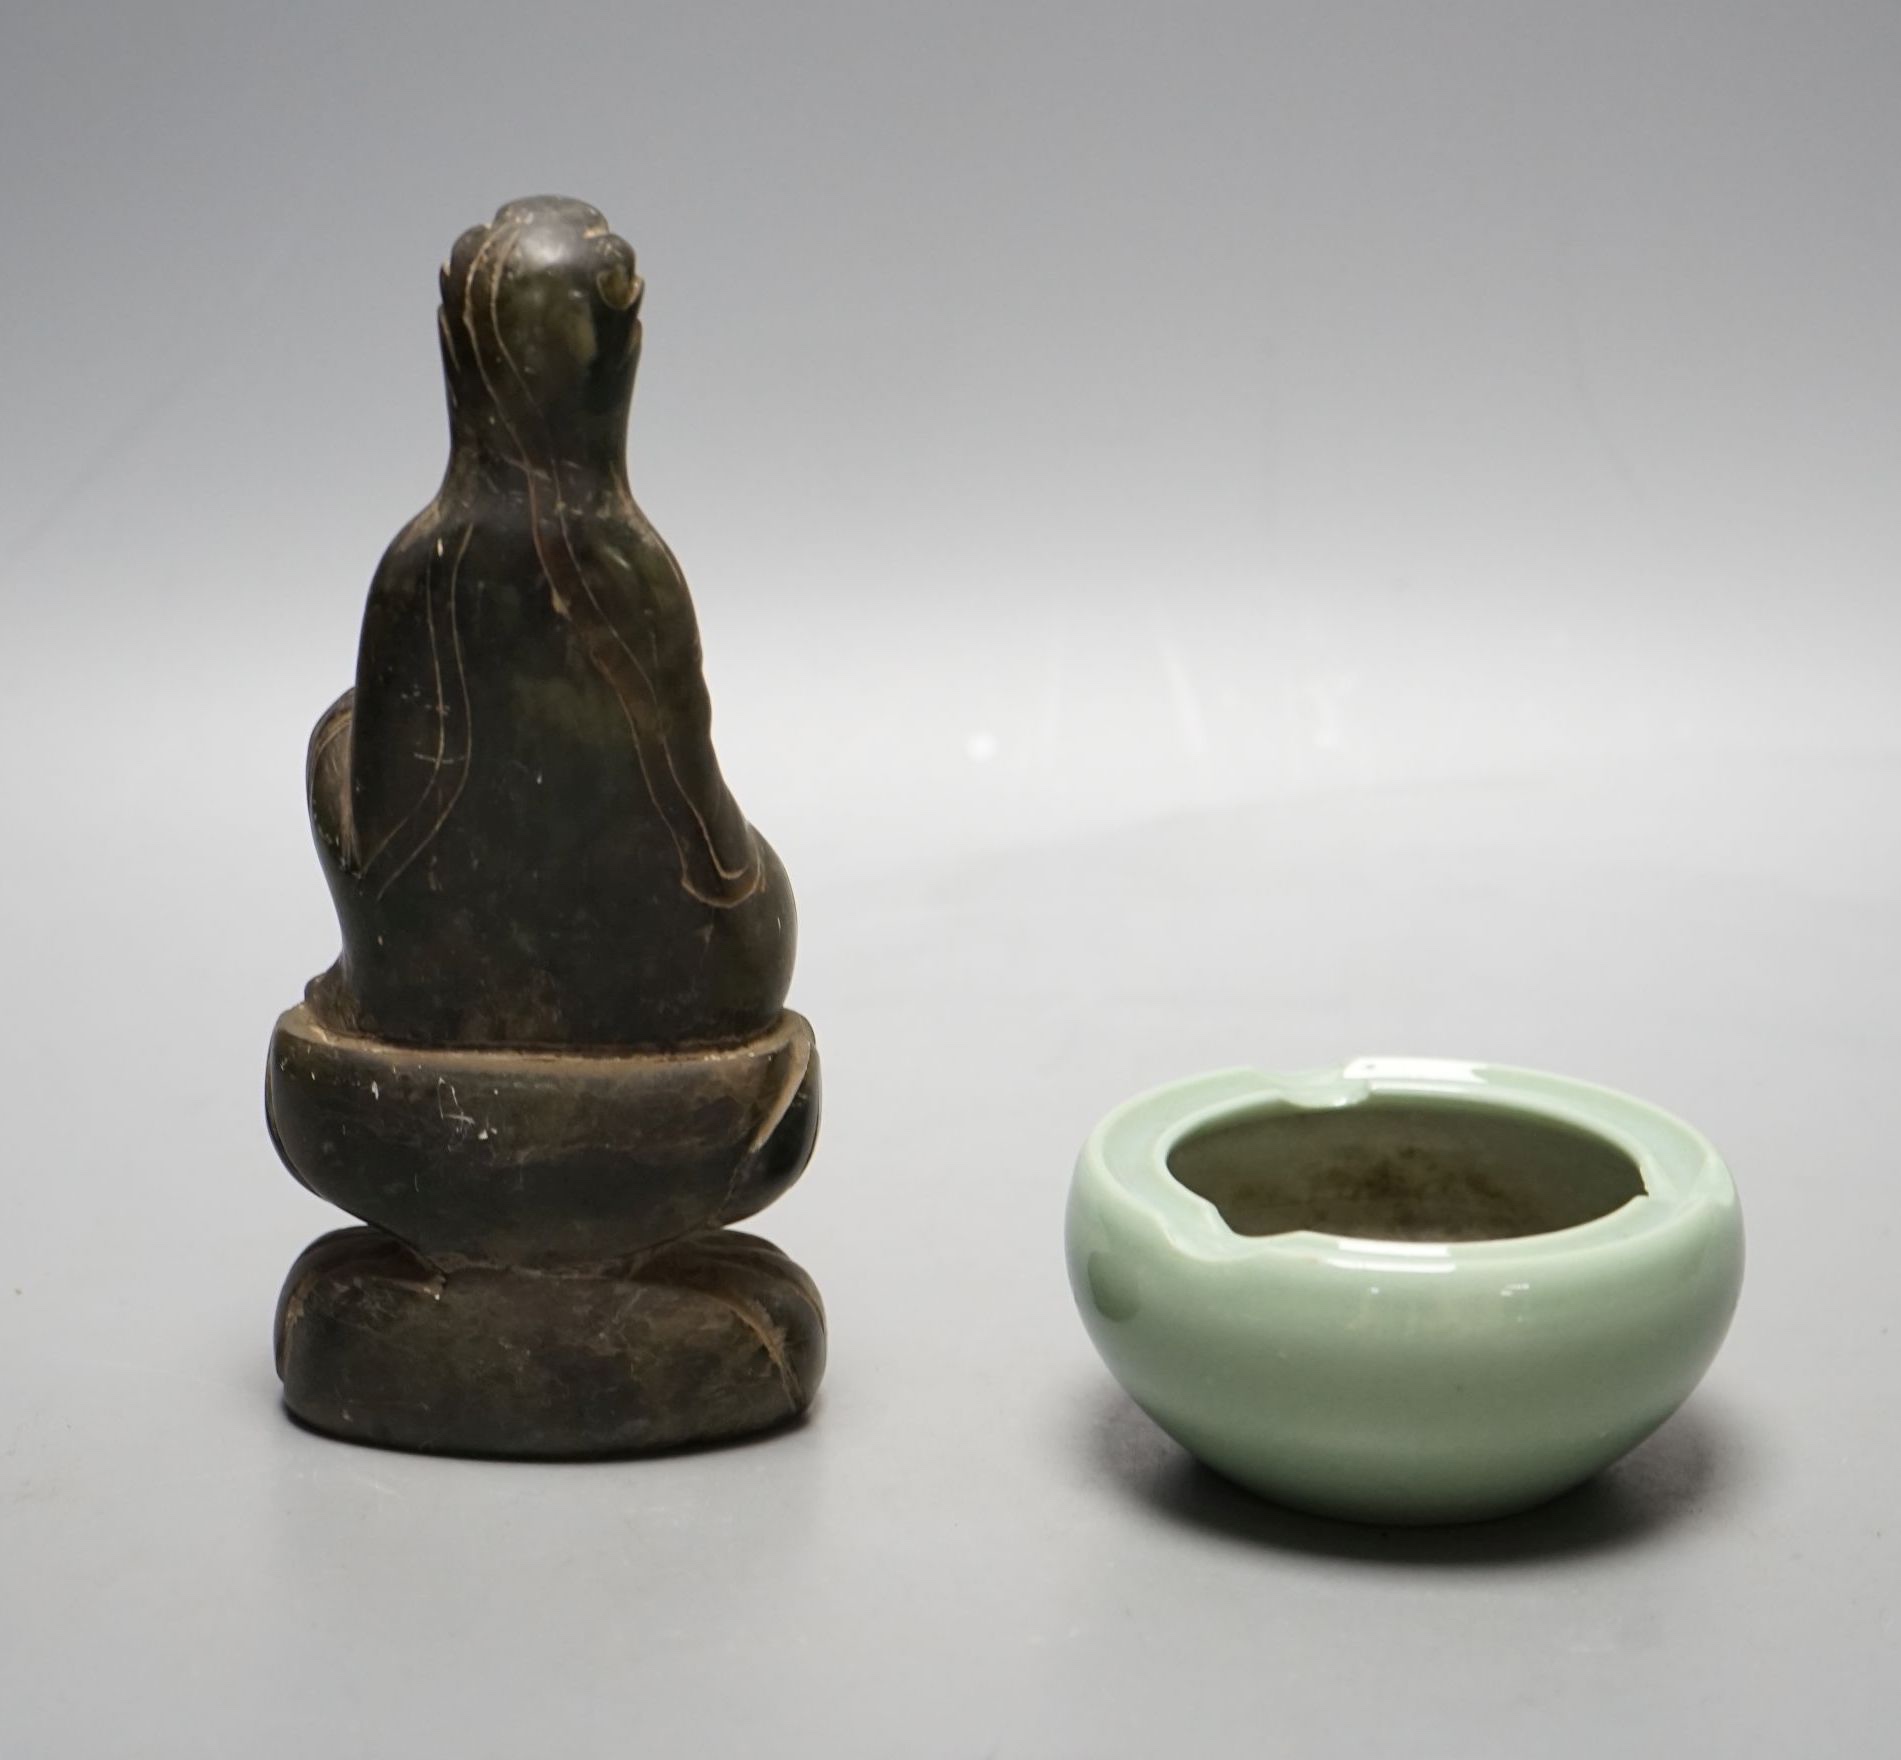 A Chinese soapstone carving of Buddha and a celadon glazed bowl, Buddha 16.5 cms high.